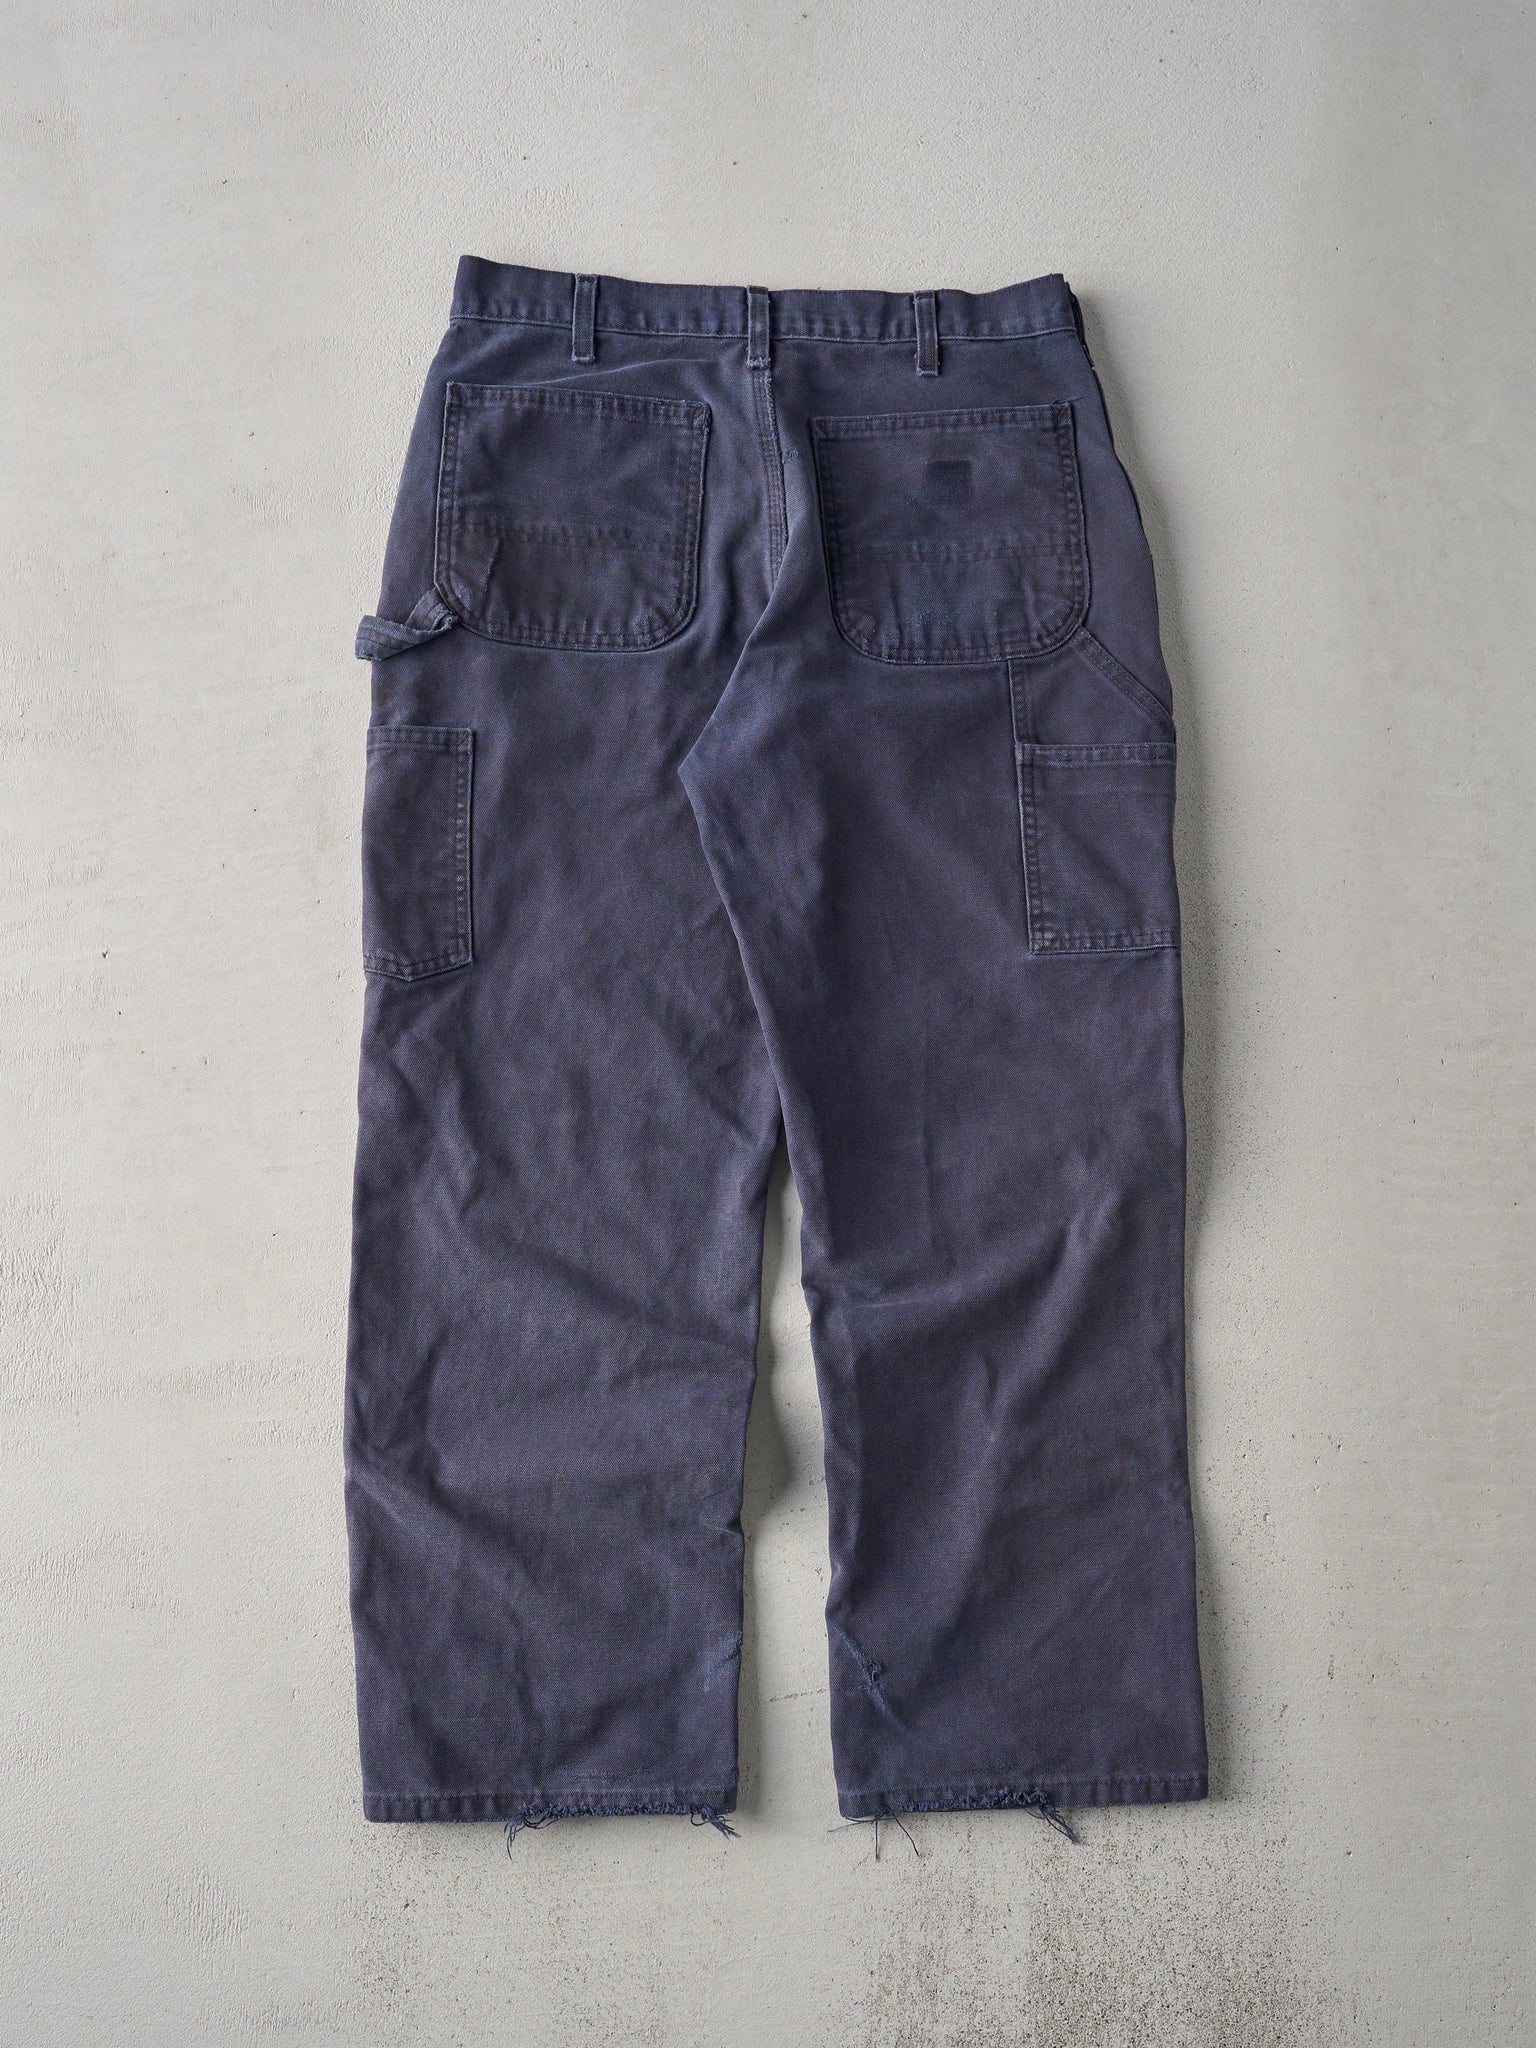 Vintage 90s Navy Carhartt Dungaree Fit Carpenter Pants (32x28)